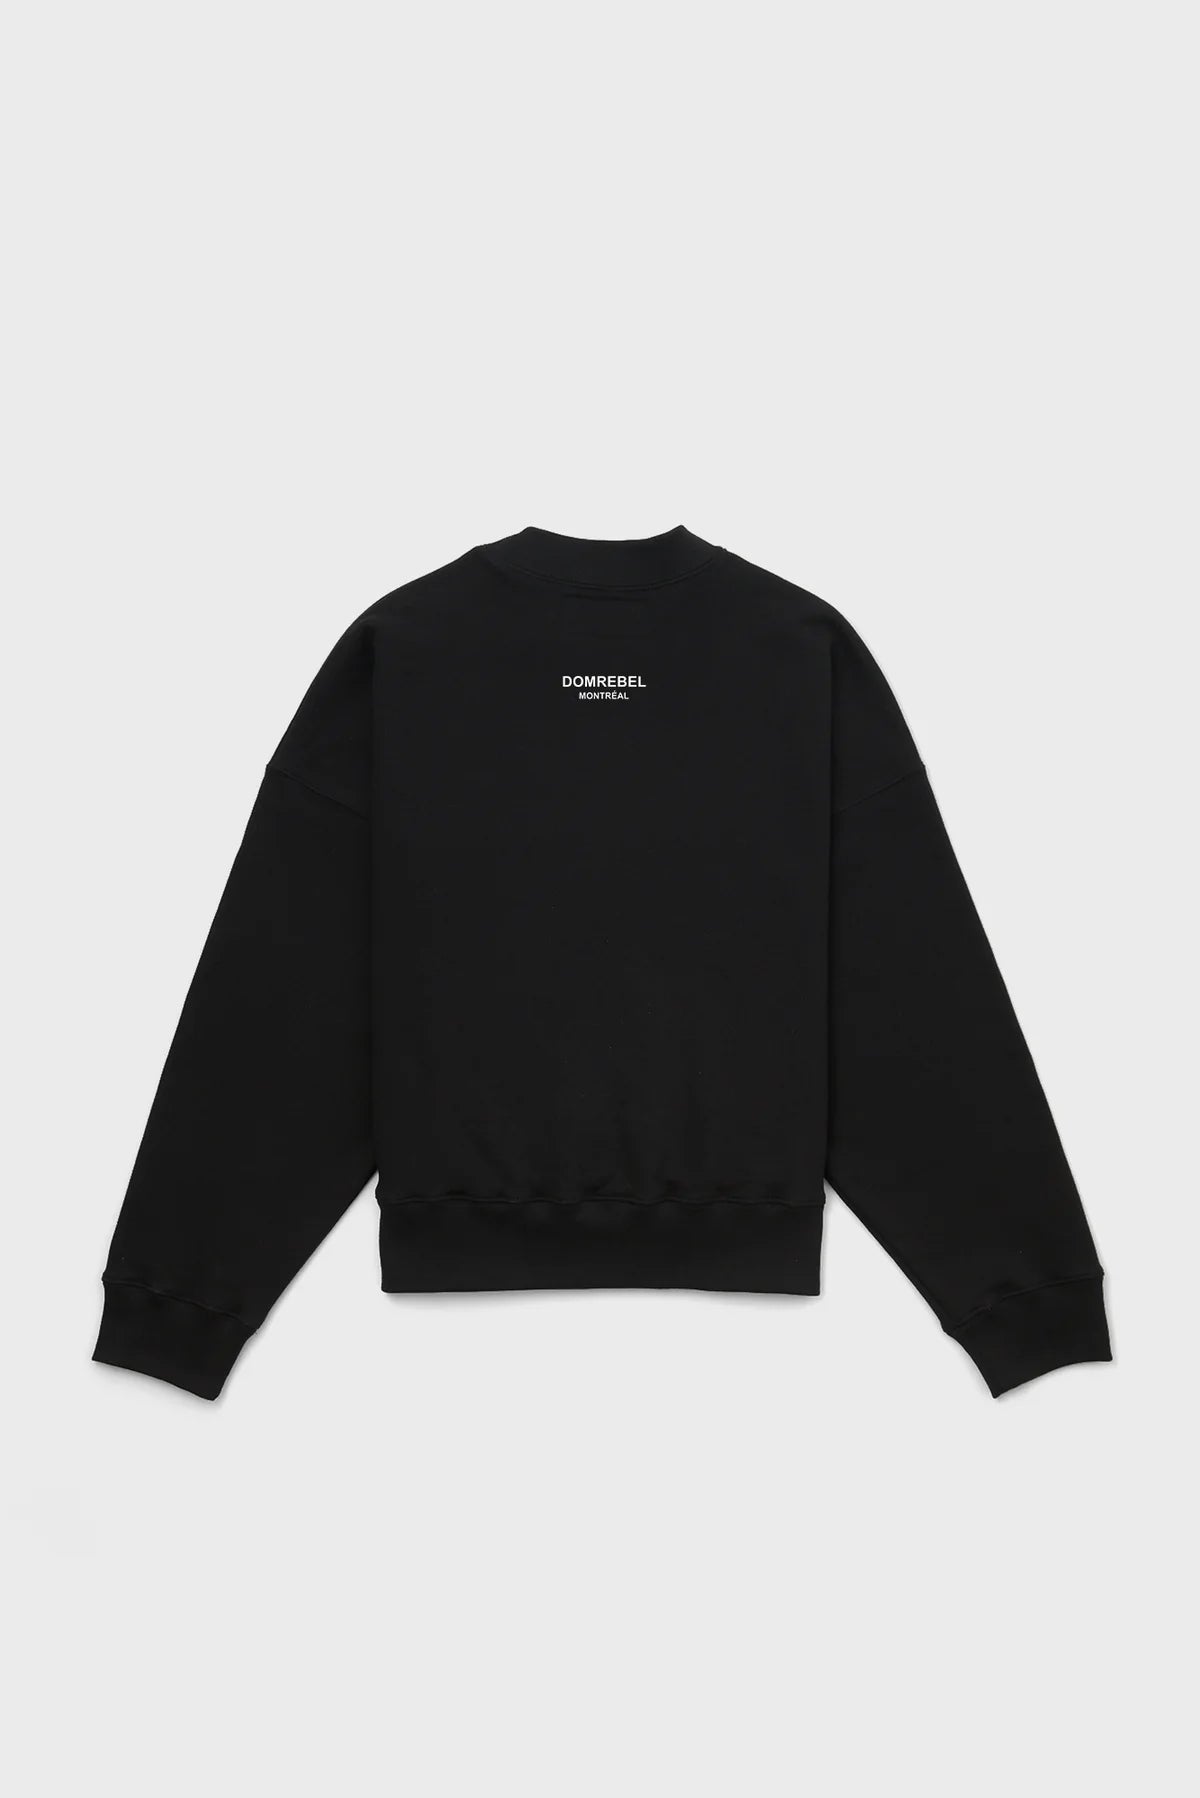 Snap Cropped Sweatshirt Black